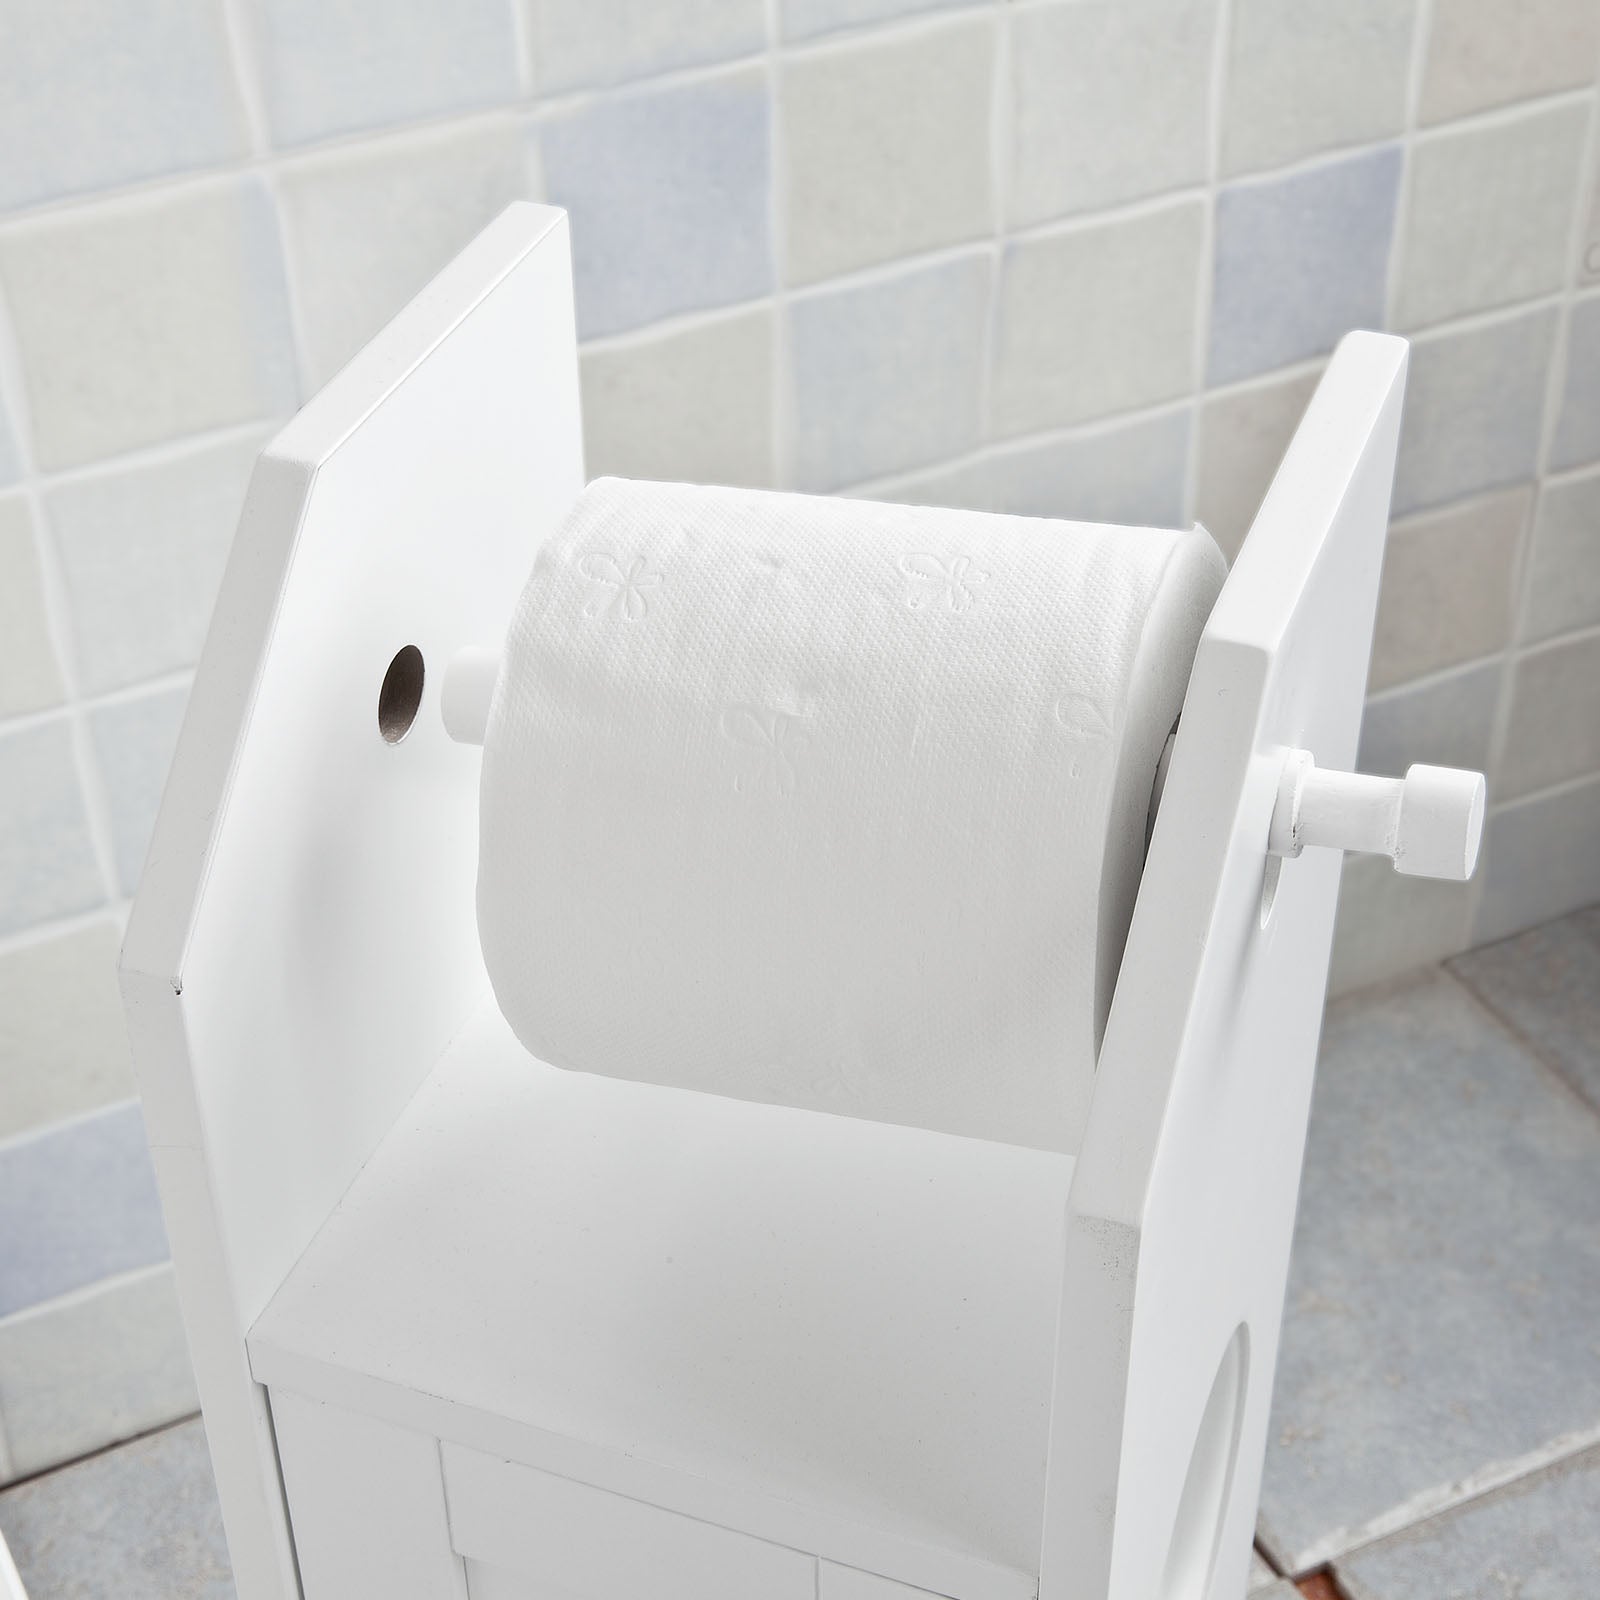 SoBuy Free Standing Wood Bathroom Cabinet,Toilet Paper Roll Holder, FRG135-W